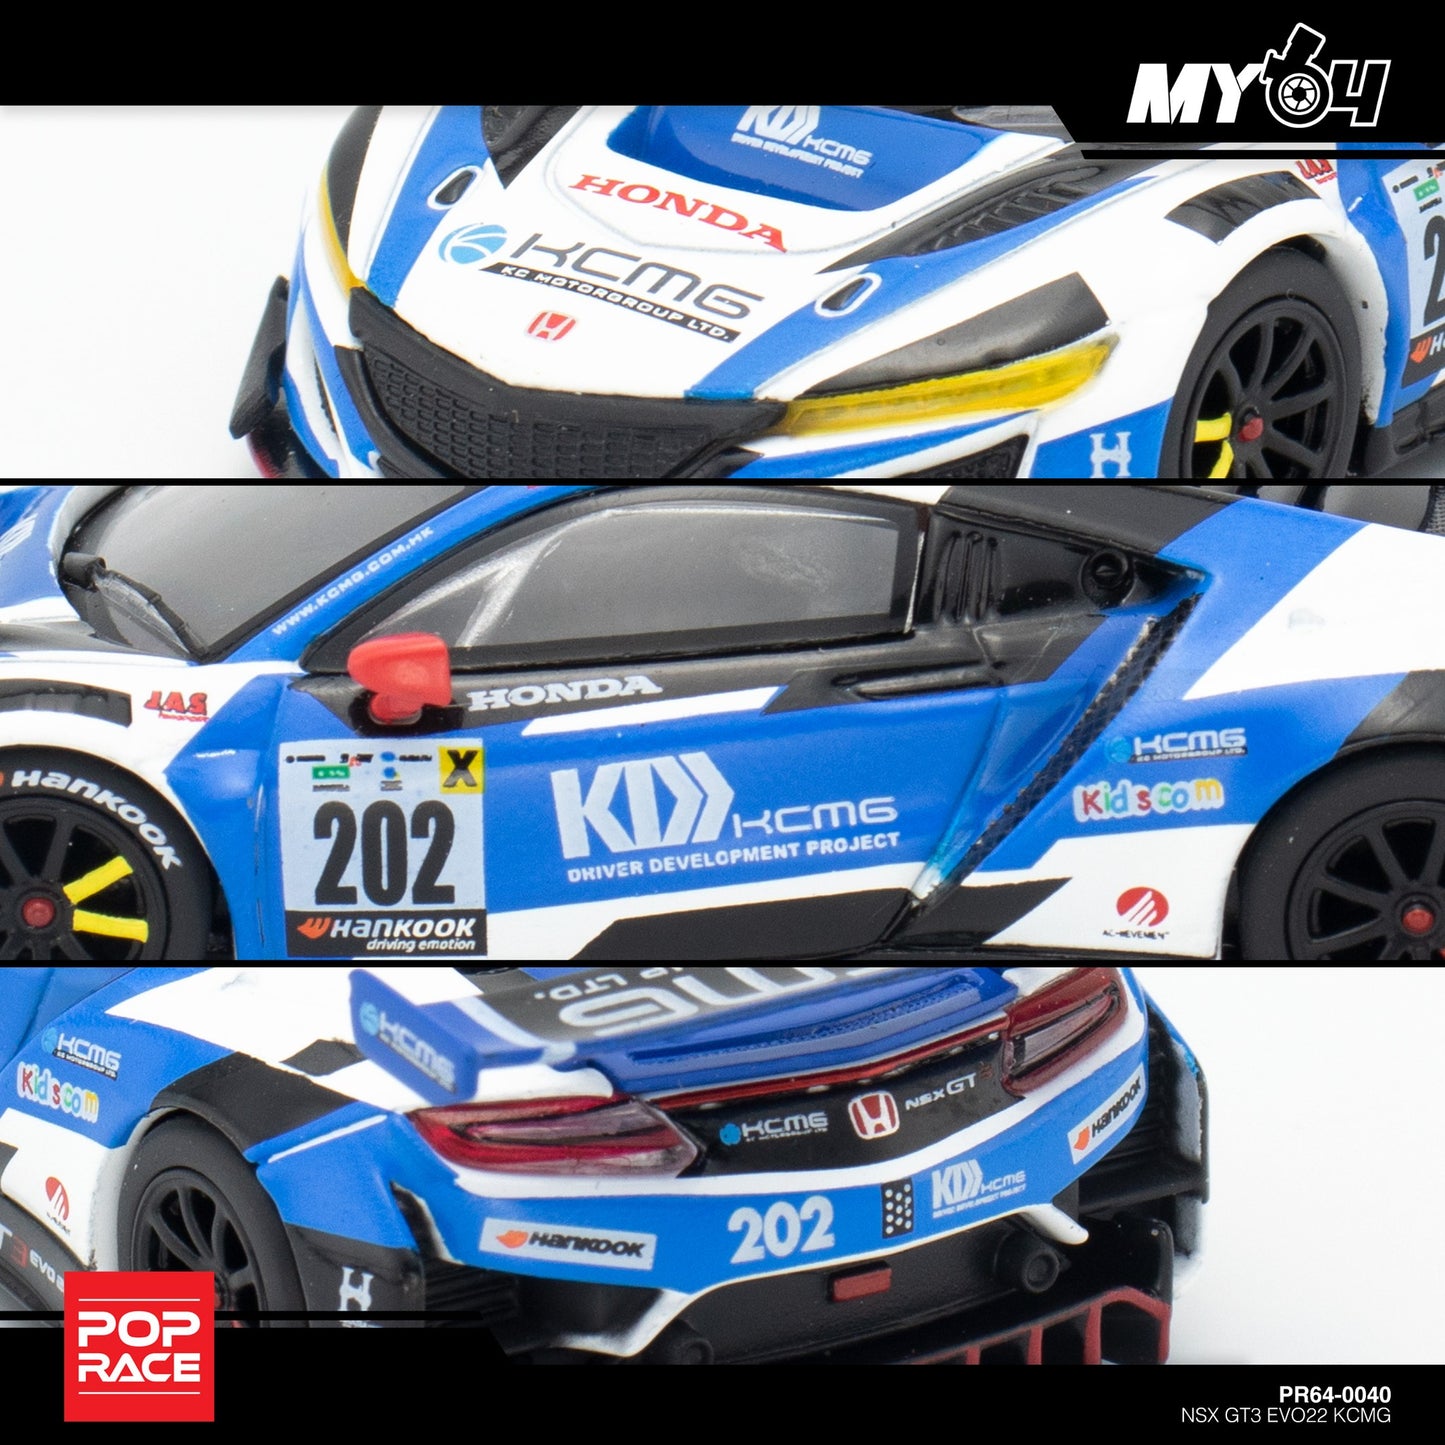 [Pop Race] Honda NSX GT3 KCMG